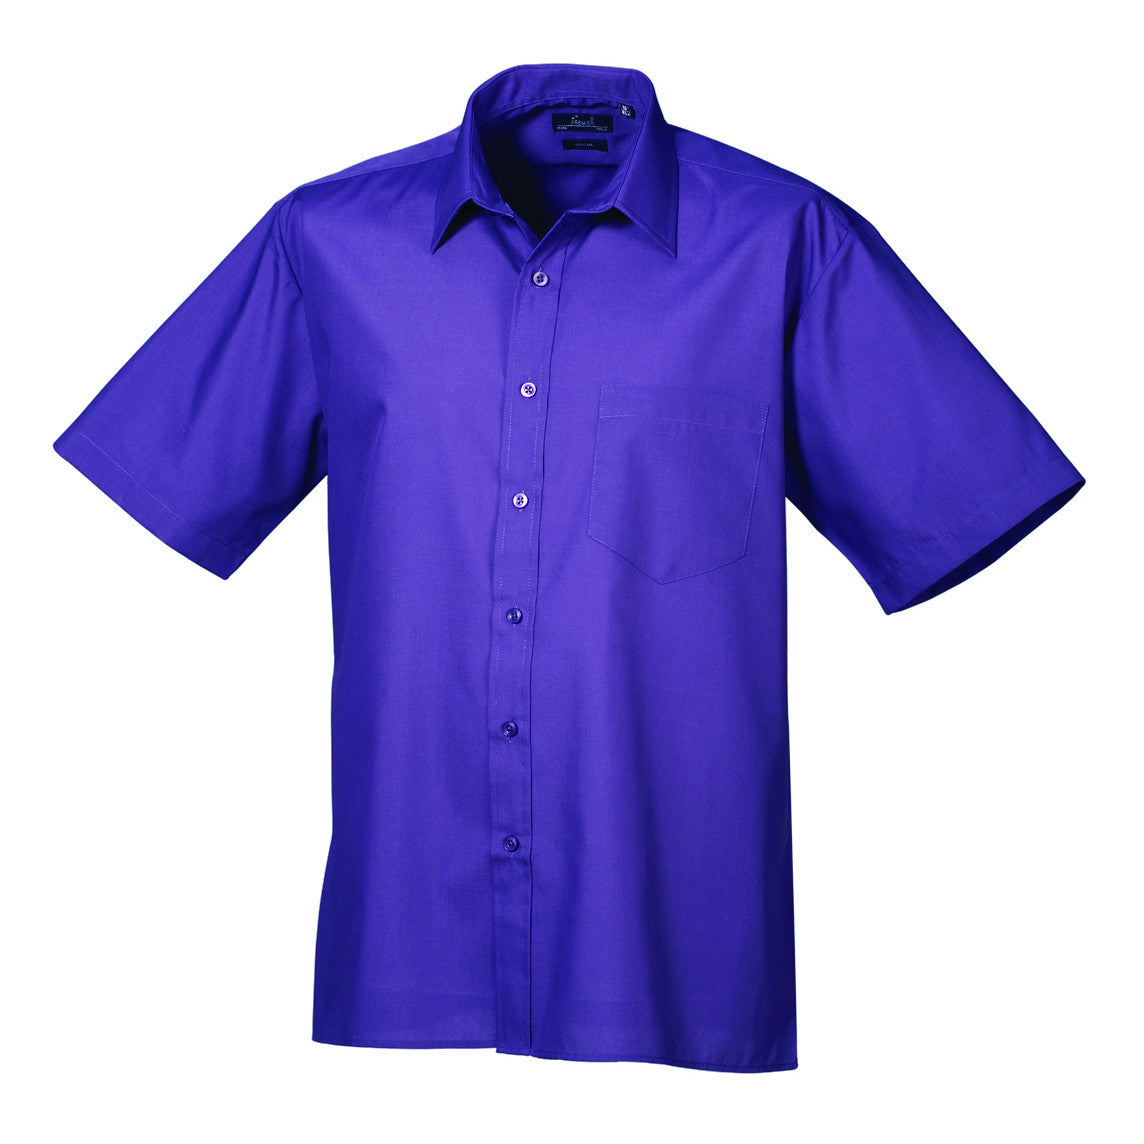 Premier Poplin Shirts (Navy, Lilac, Purple, Violet, Aubergine) - peterdrew.com
 - 4